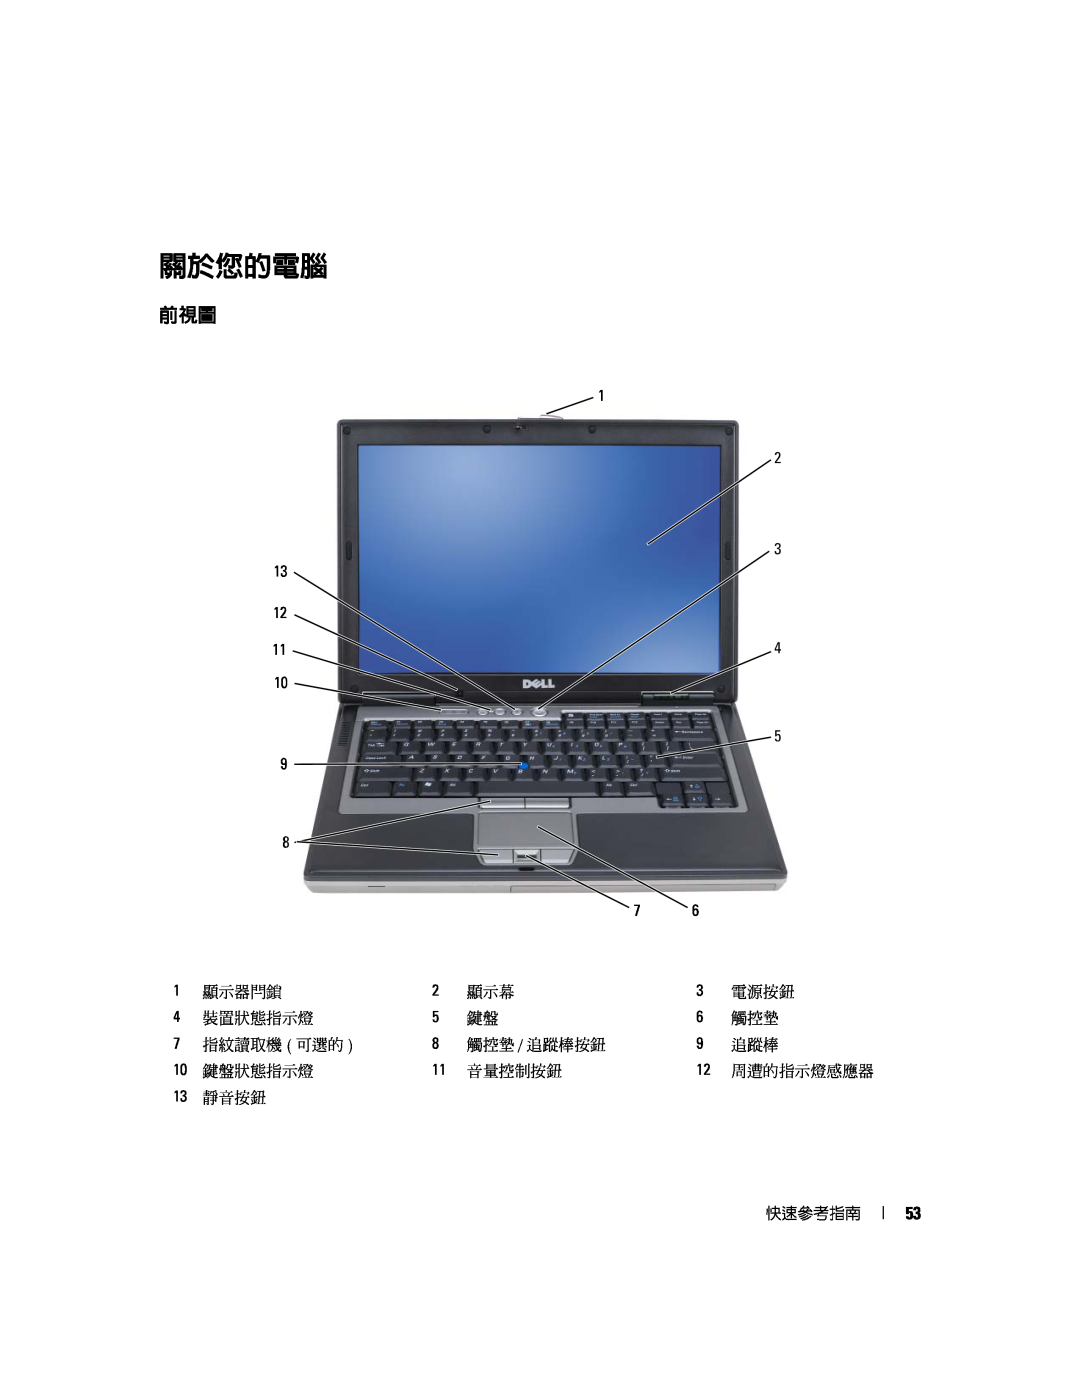 Dell D631, XP140 manual 關於您的電腦 